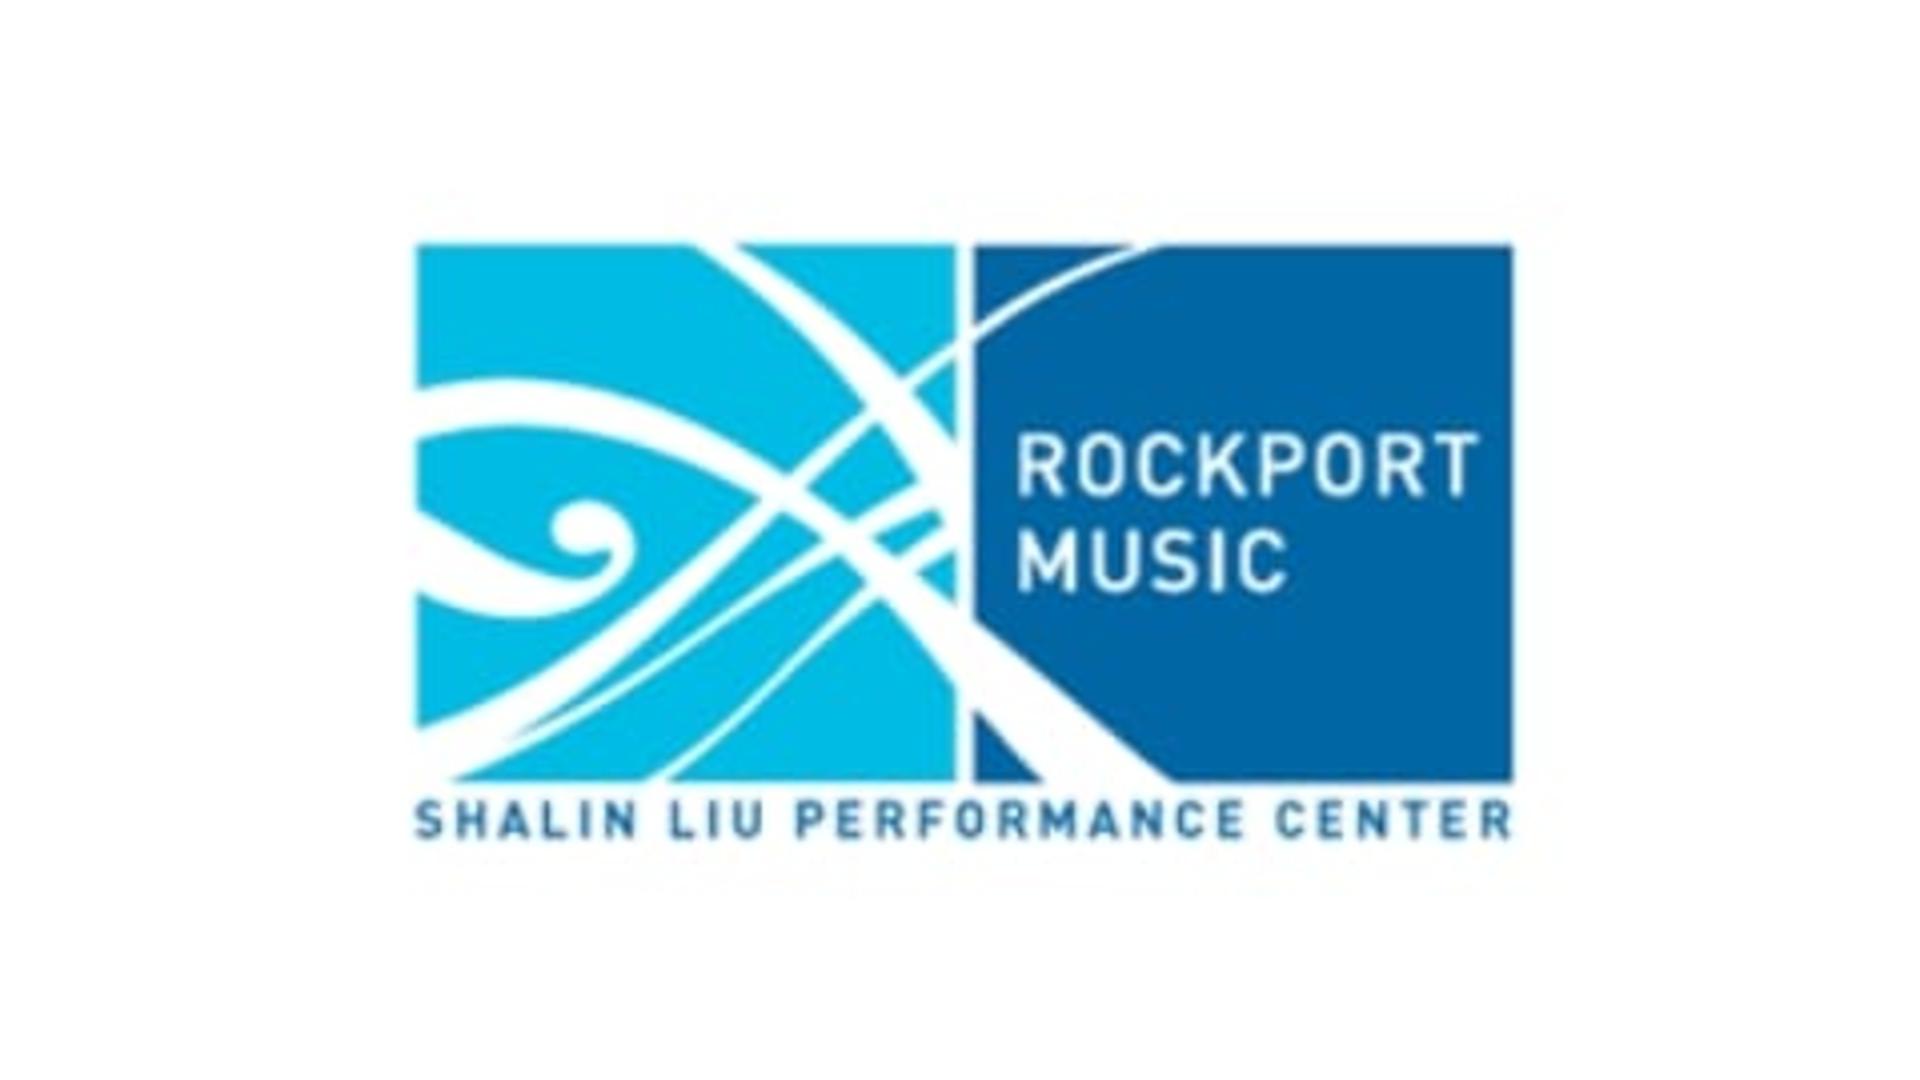 Rockport Music (Sponsor)